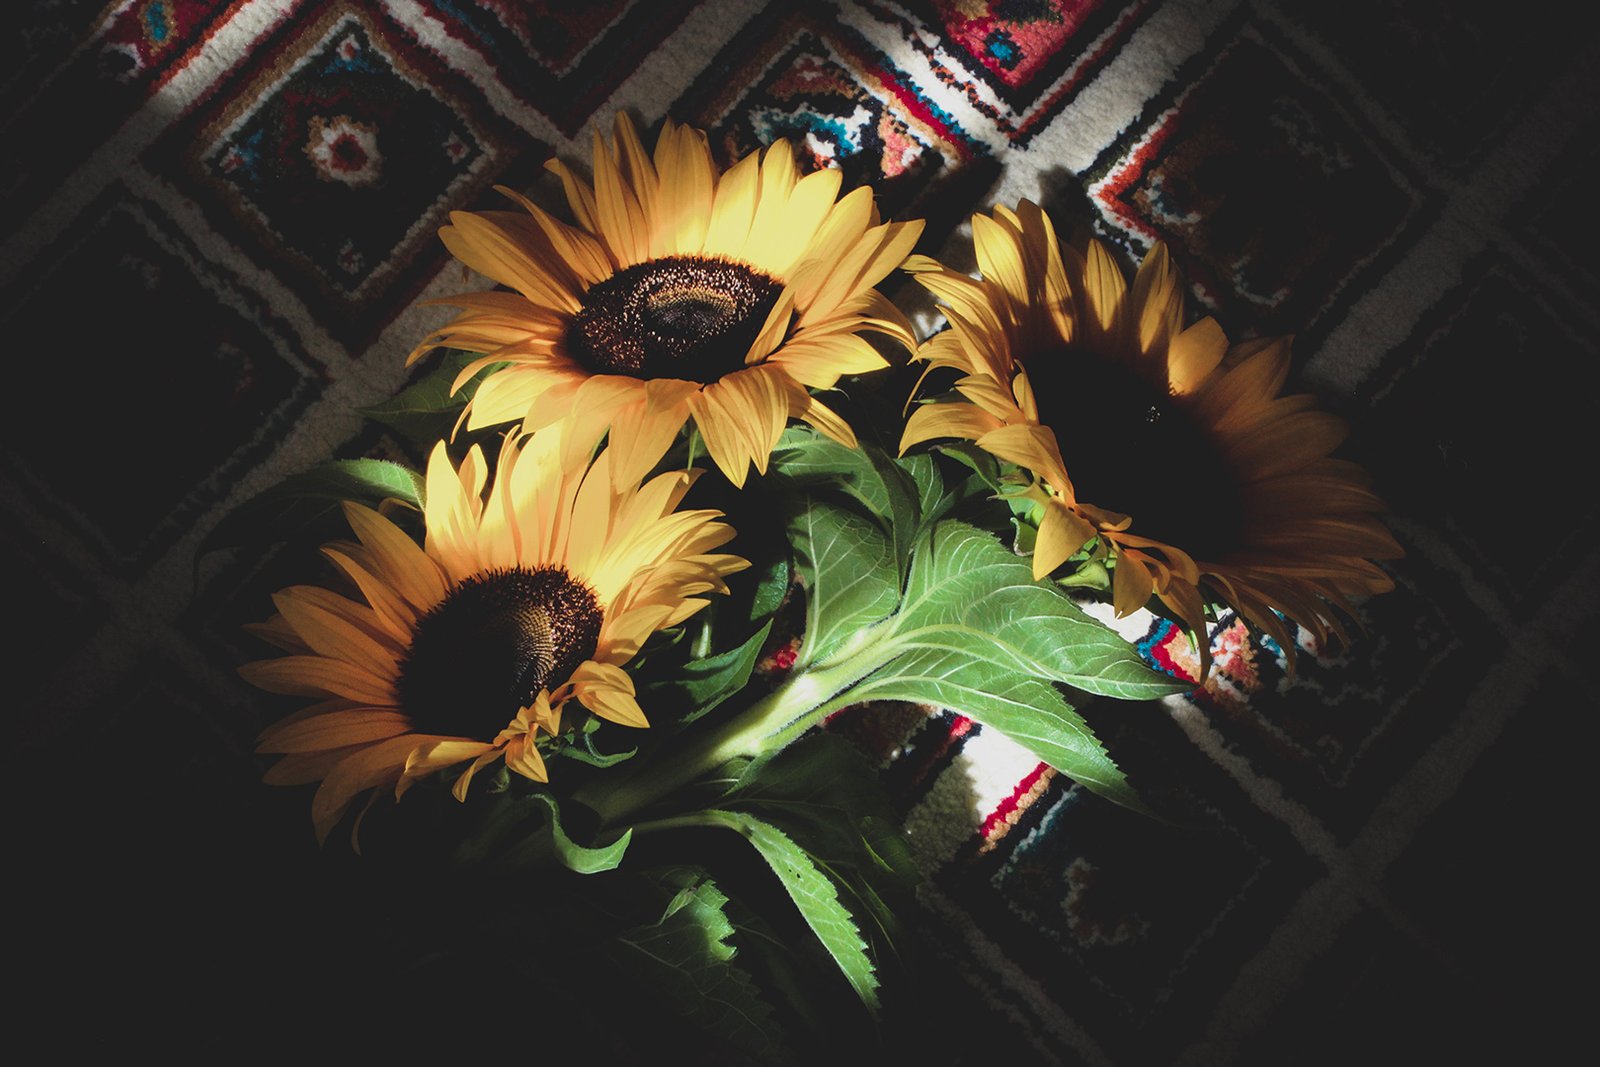 Sunflowers on the carpet